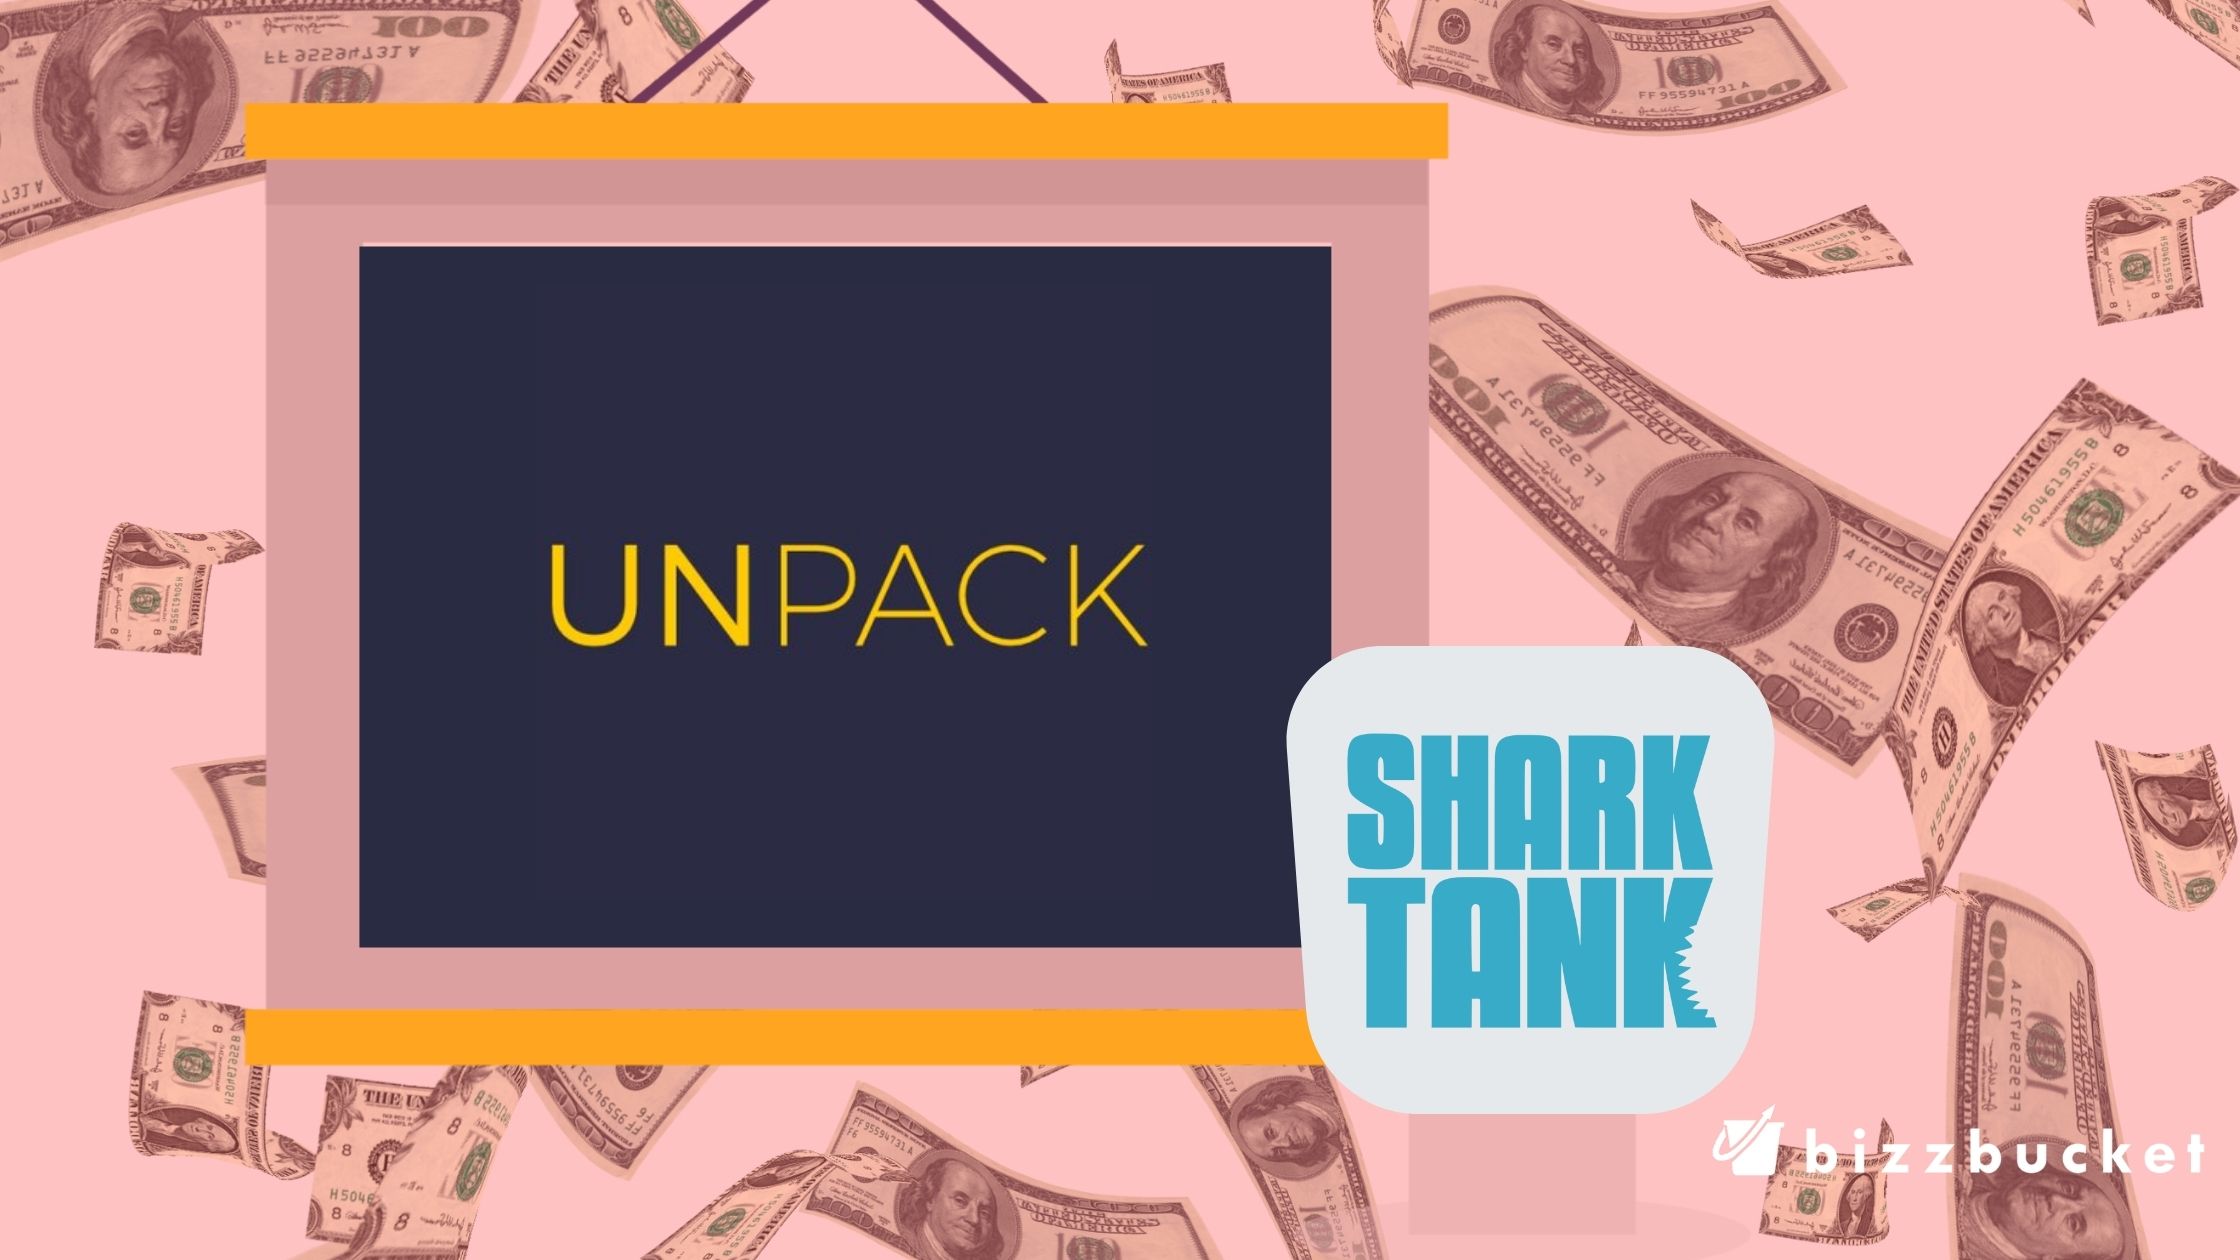 Unpack shark tank update